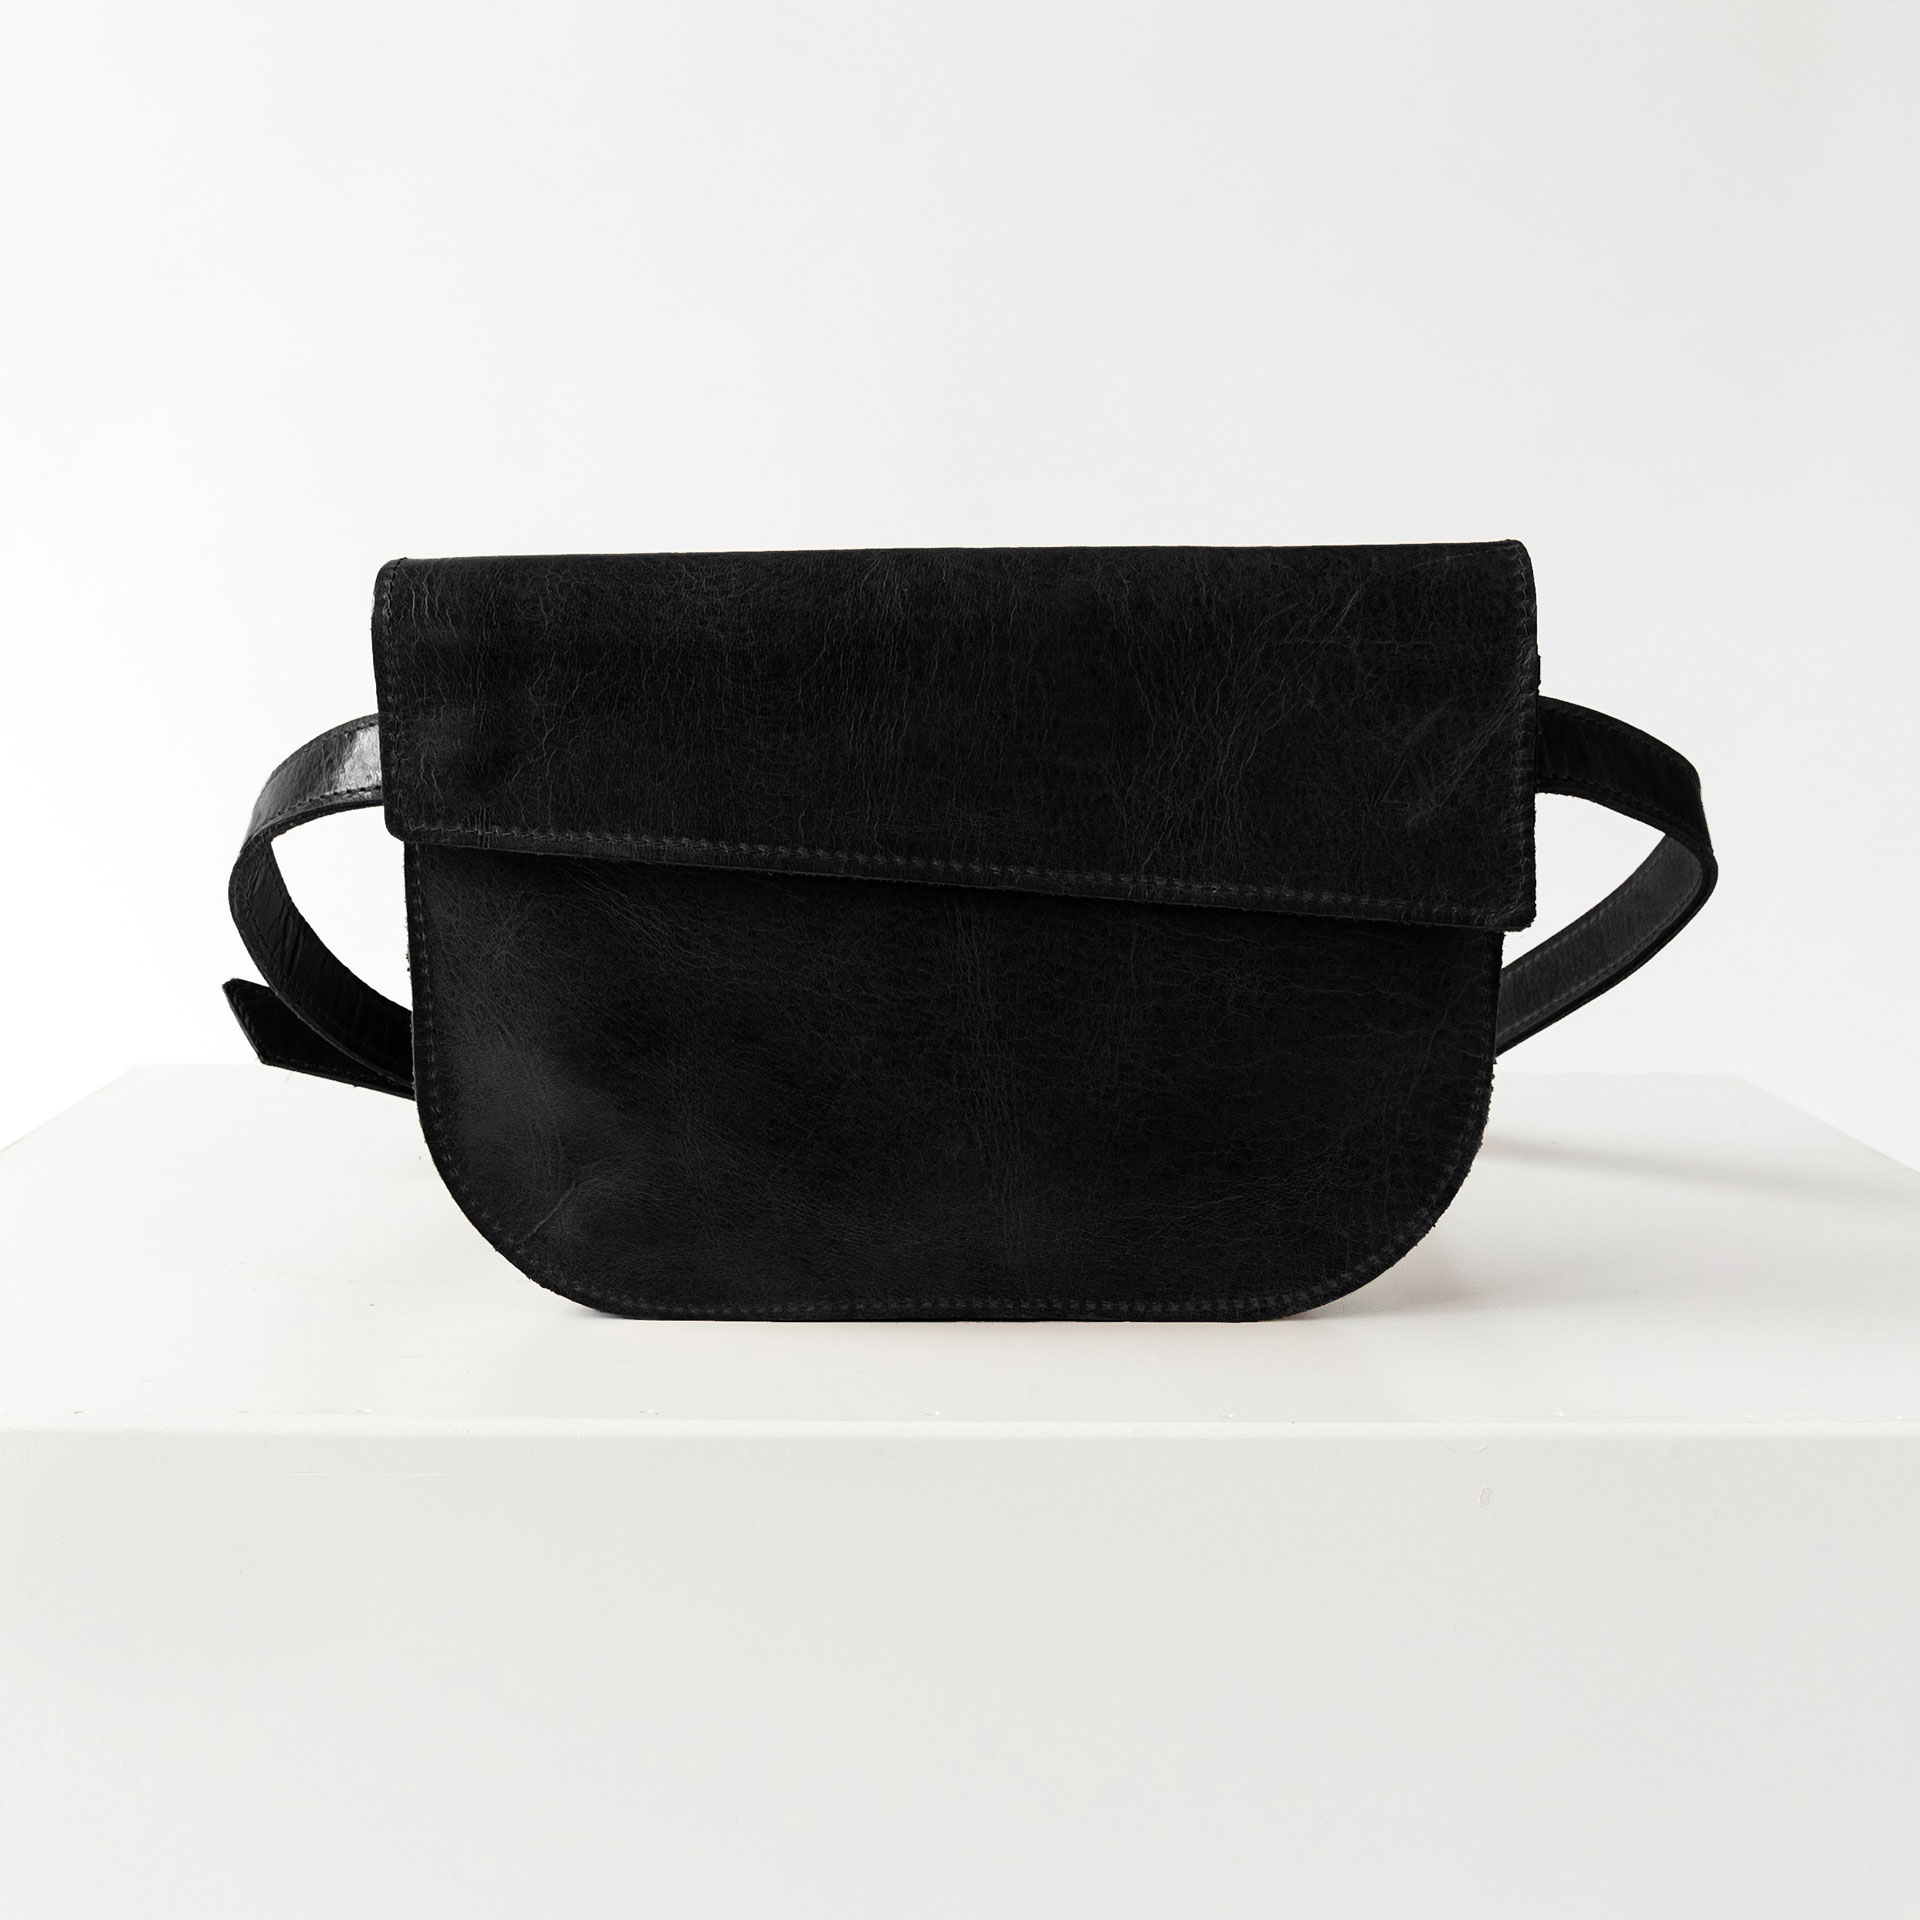 Crossbody Bag TEA in der Farbe Schwarz geölt.